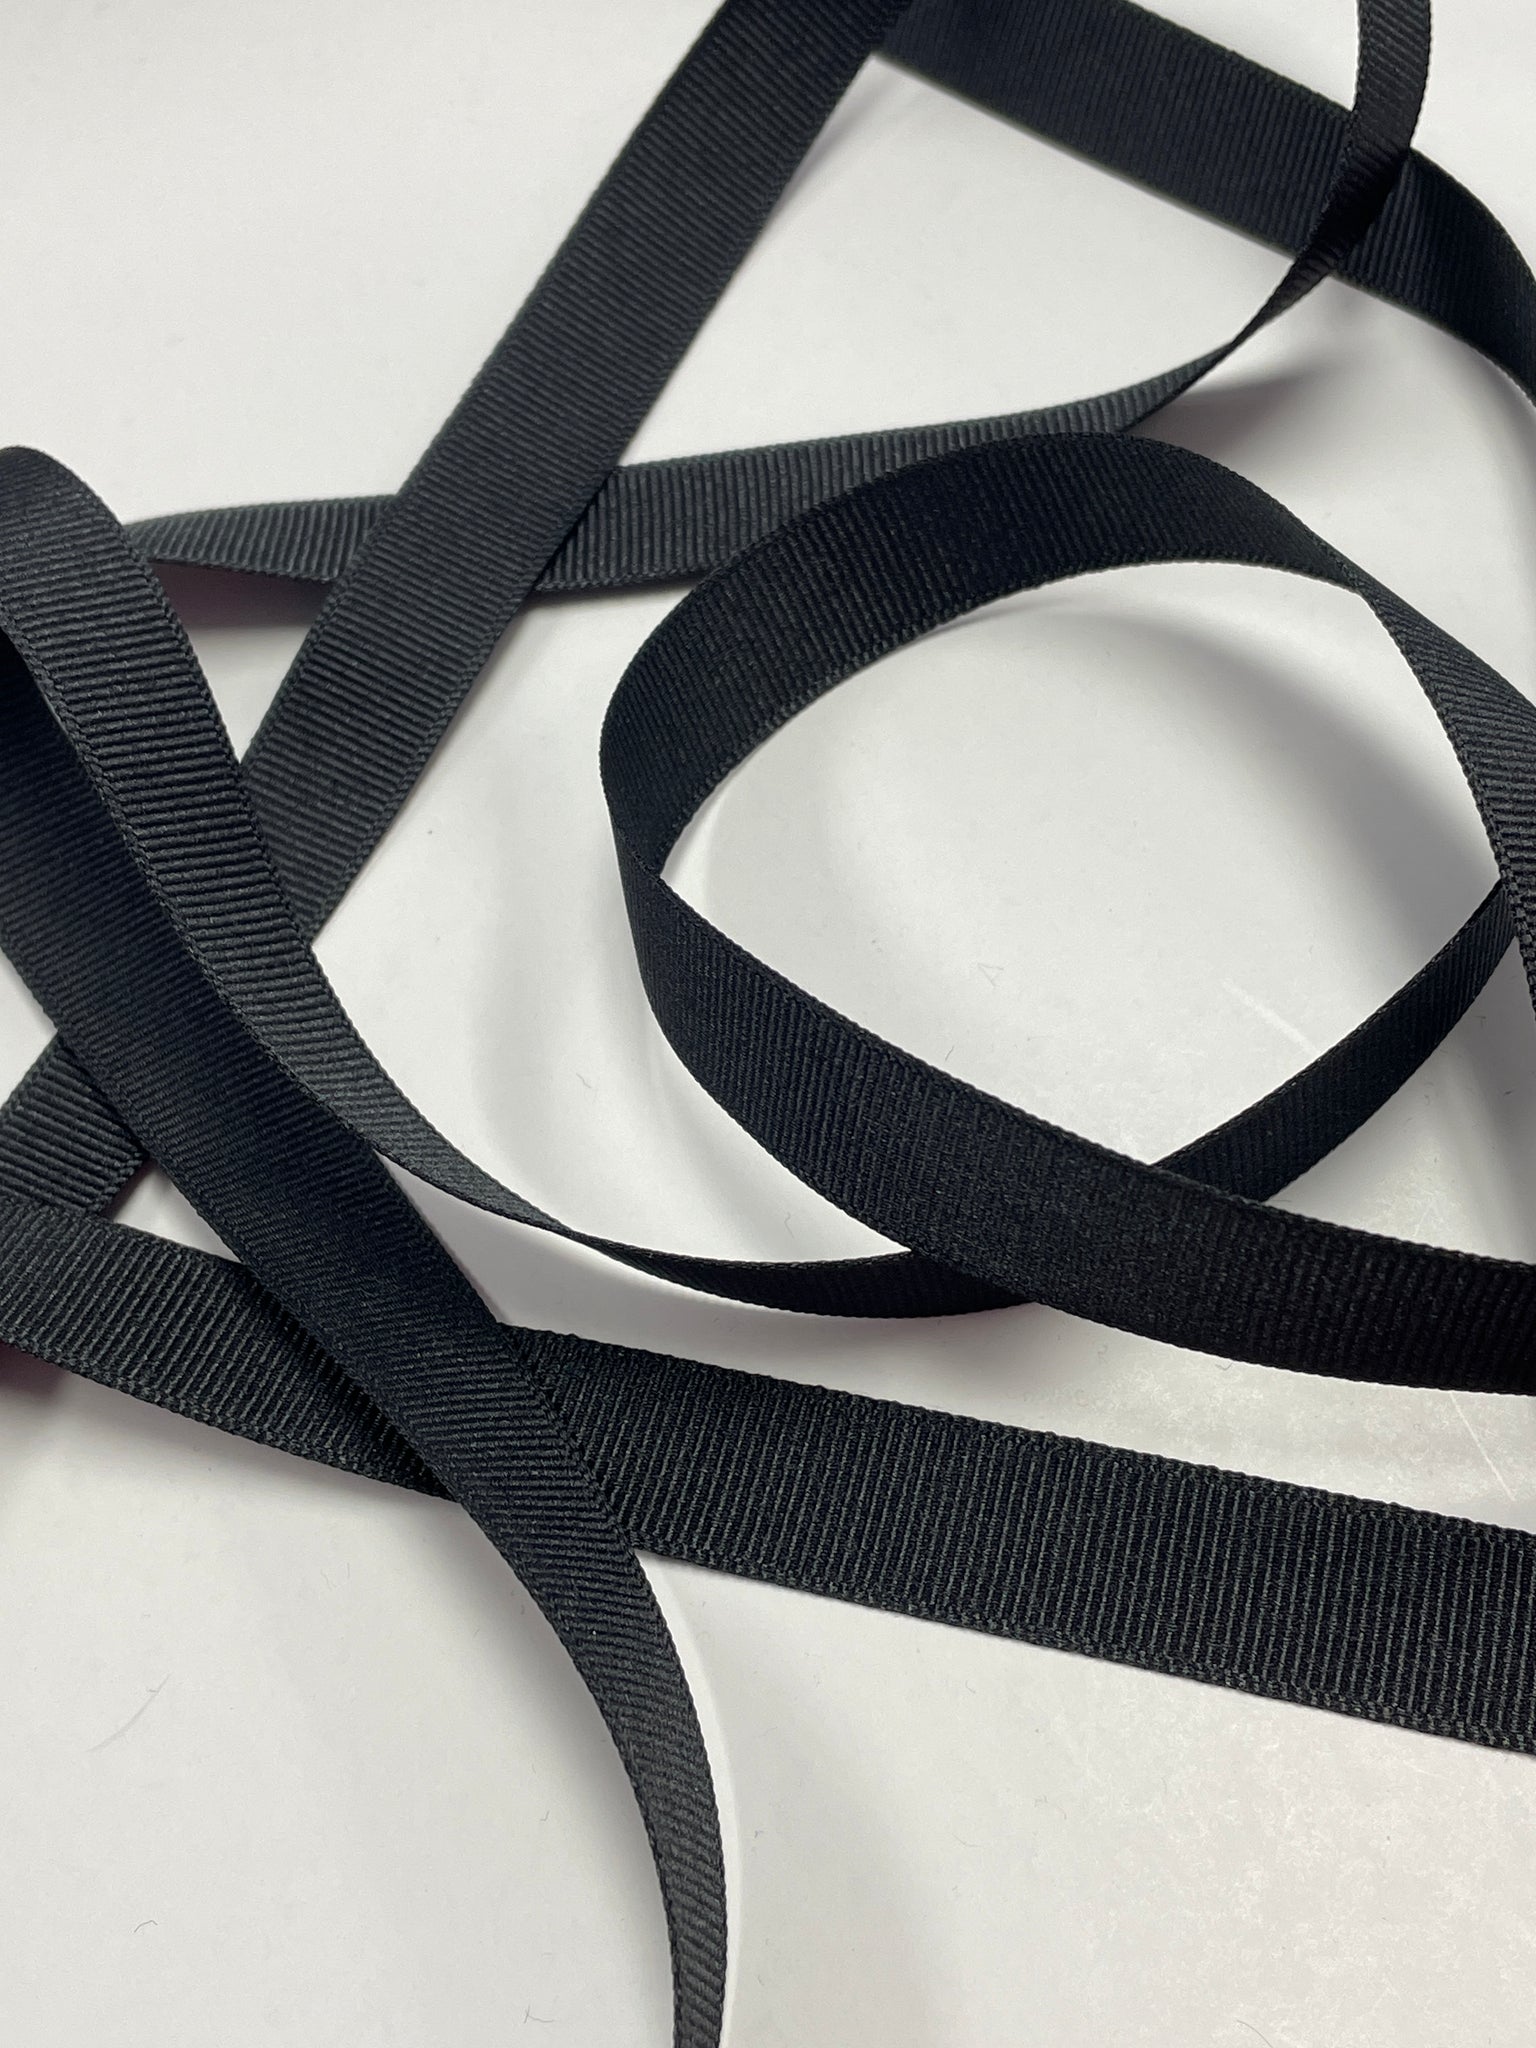 7 YD Polyester Grosgrain Ribbon - Black